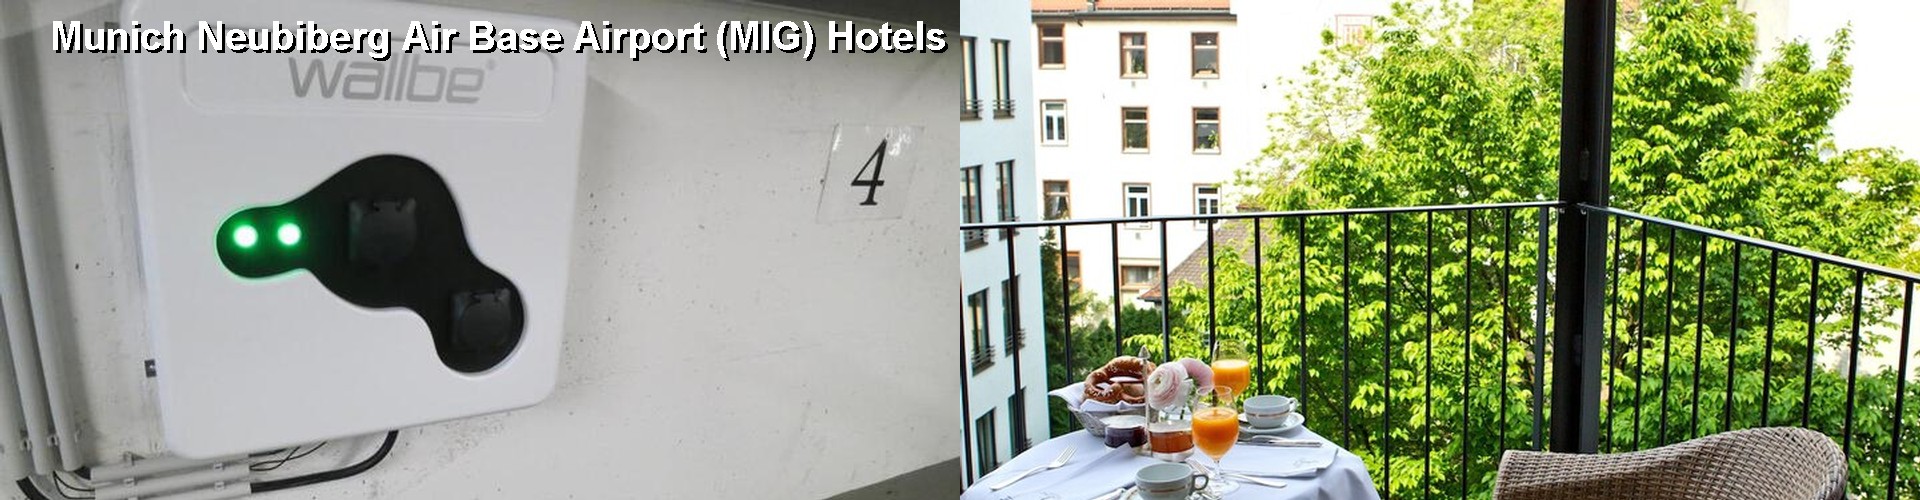 5 Best Hotels near Munich Neubiberg Air Base Airport (MIG)